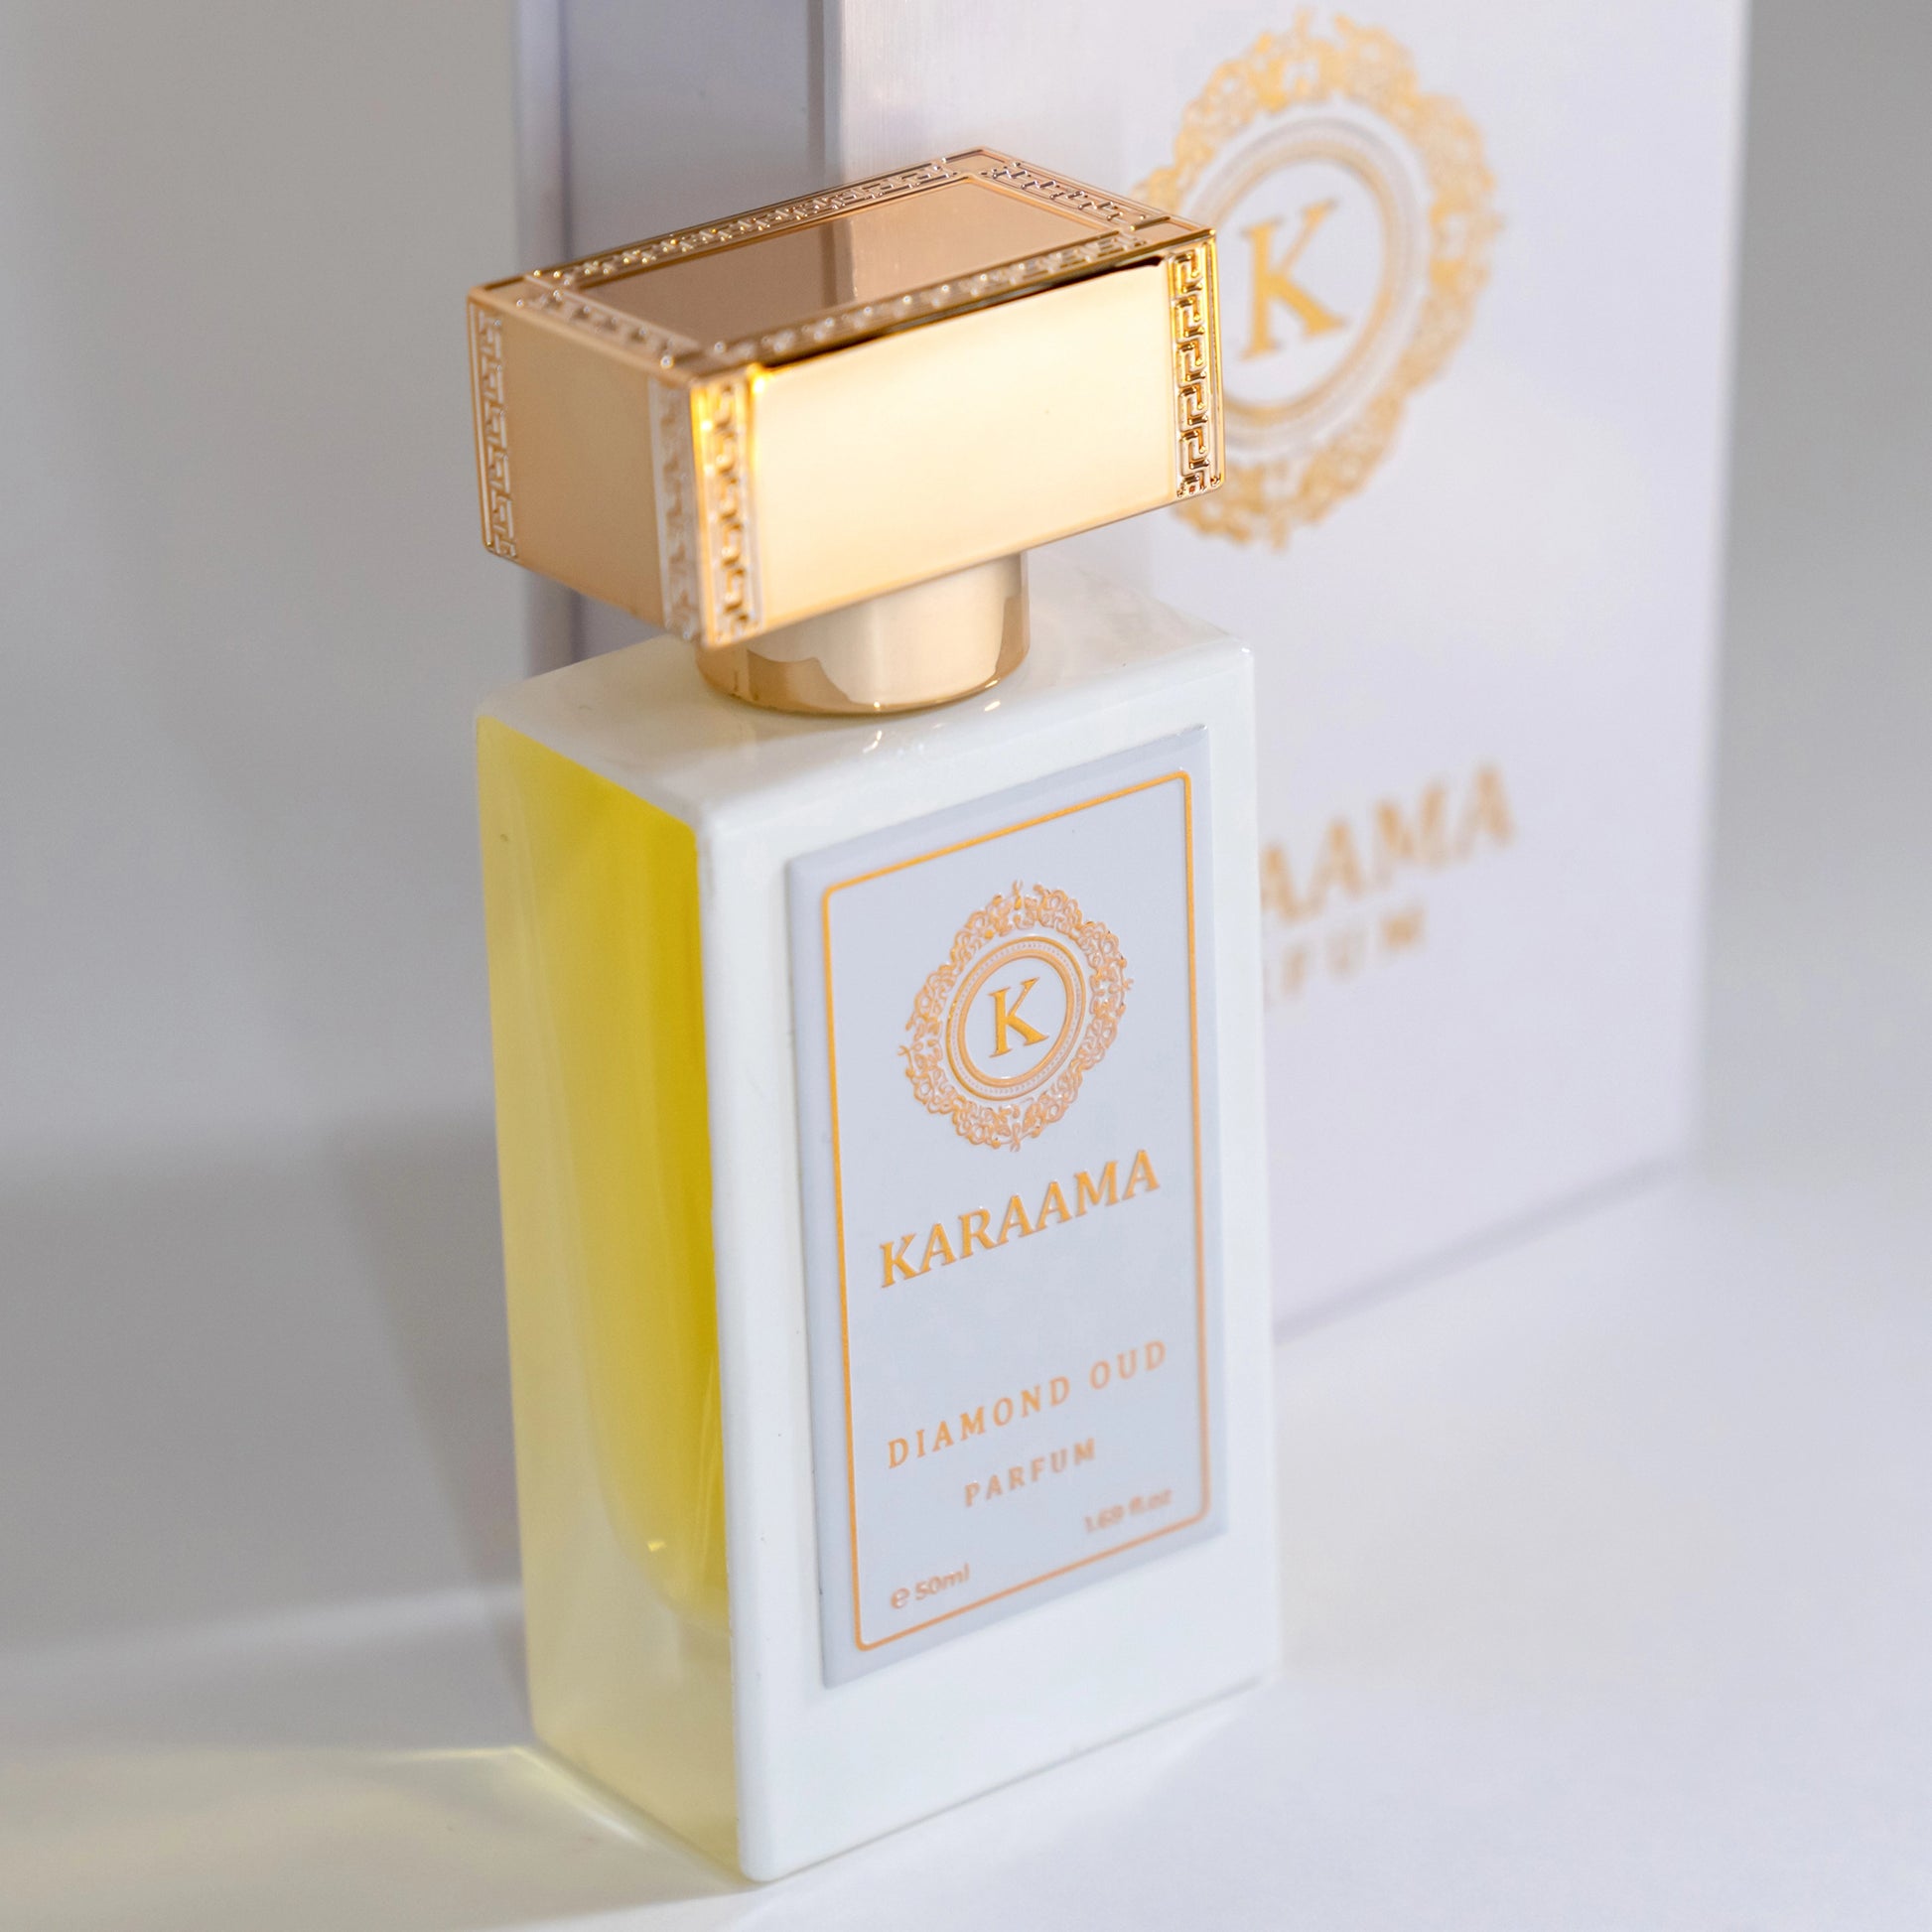 Elegant KARAAMA Diamond Oud Parfum showcased beside its box, featuring a golden cap and luxurious branding. Perfect for scent aficionados seeking a trending, high-class fragrance. #LuxuryPerfume #DiamondOud #KARAAMA #ScentTrend #EleganceInABottle